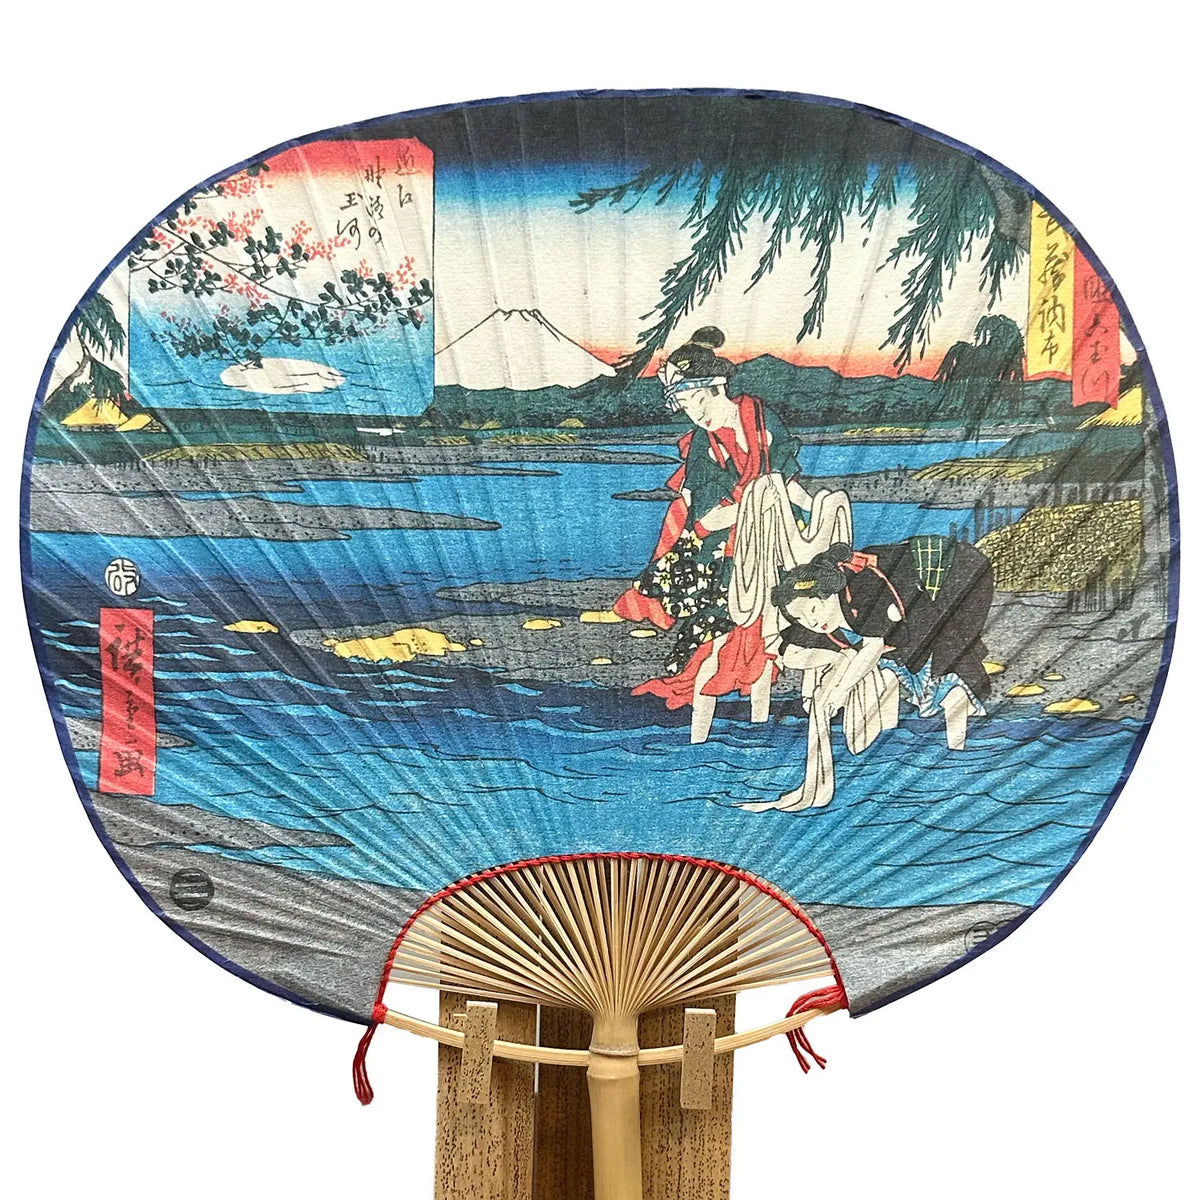 Edo Ukiyoe Hiroshige "Musashi-Chofu/Tama Fluss", Rokutama Fluss, Japan